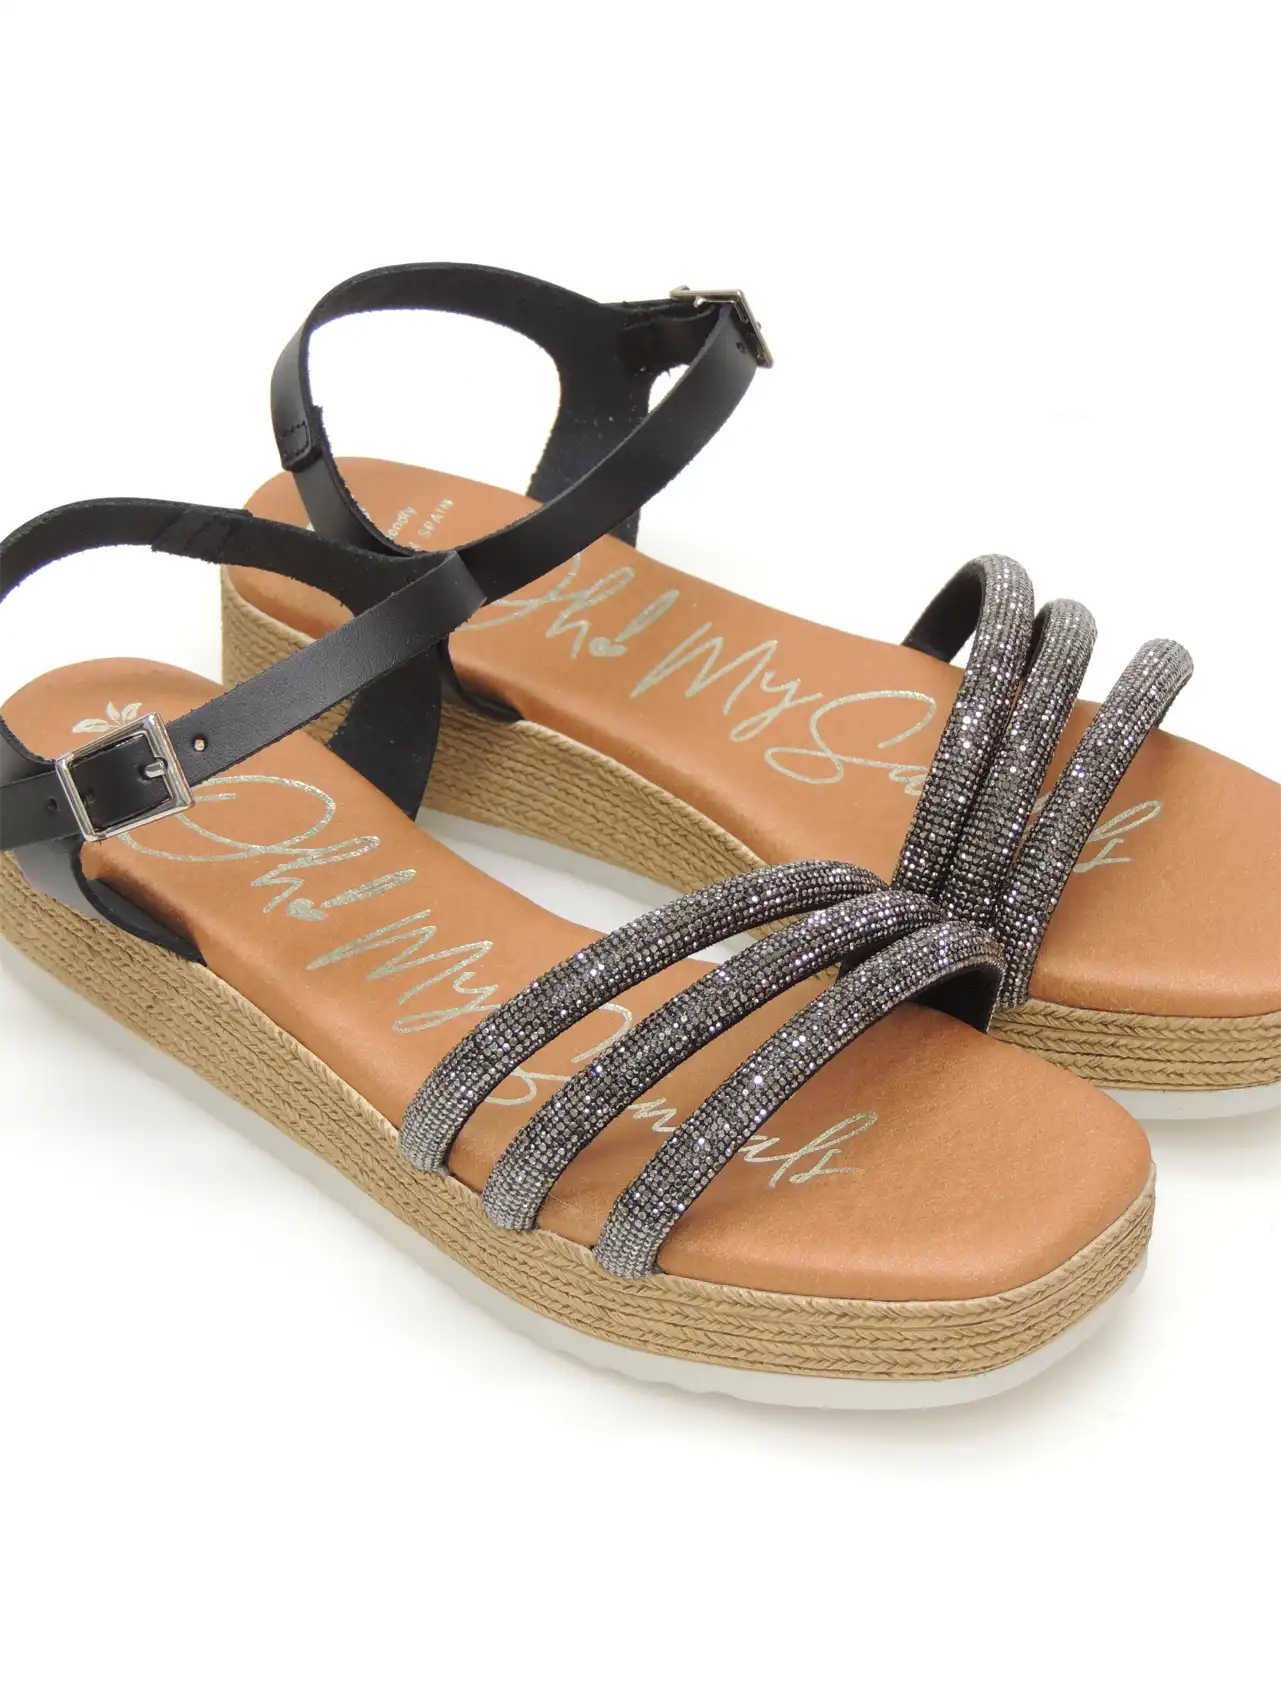 sandalias-plataforma-sandals-5434-piel-negro